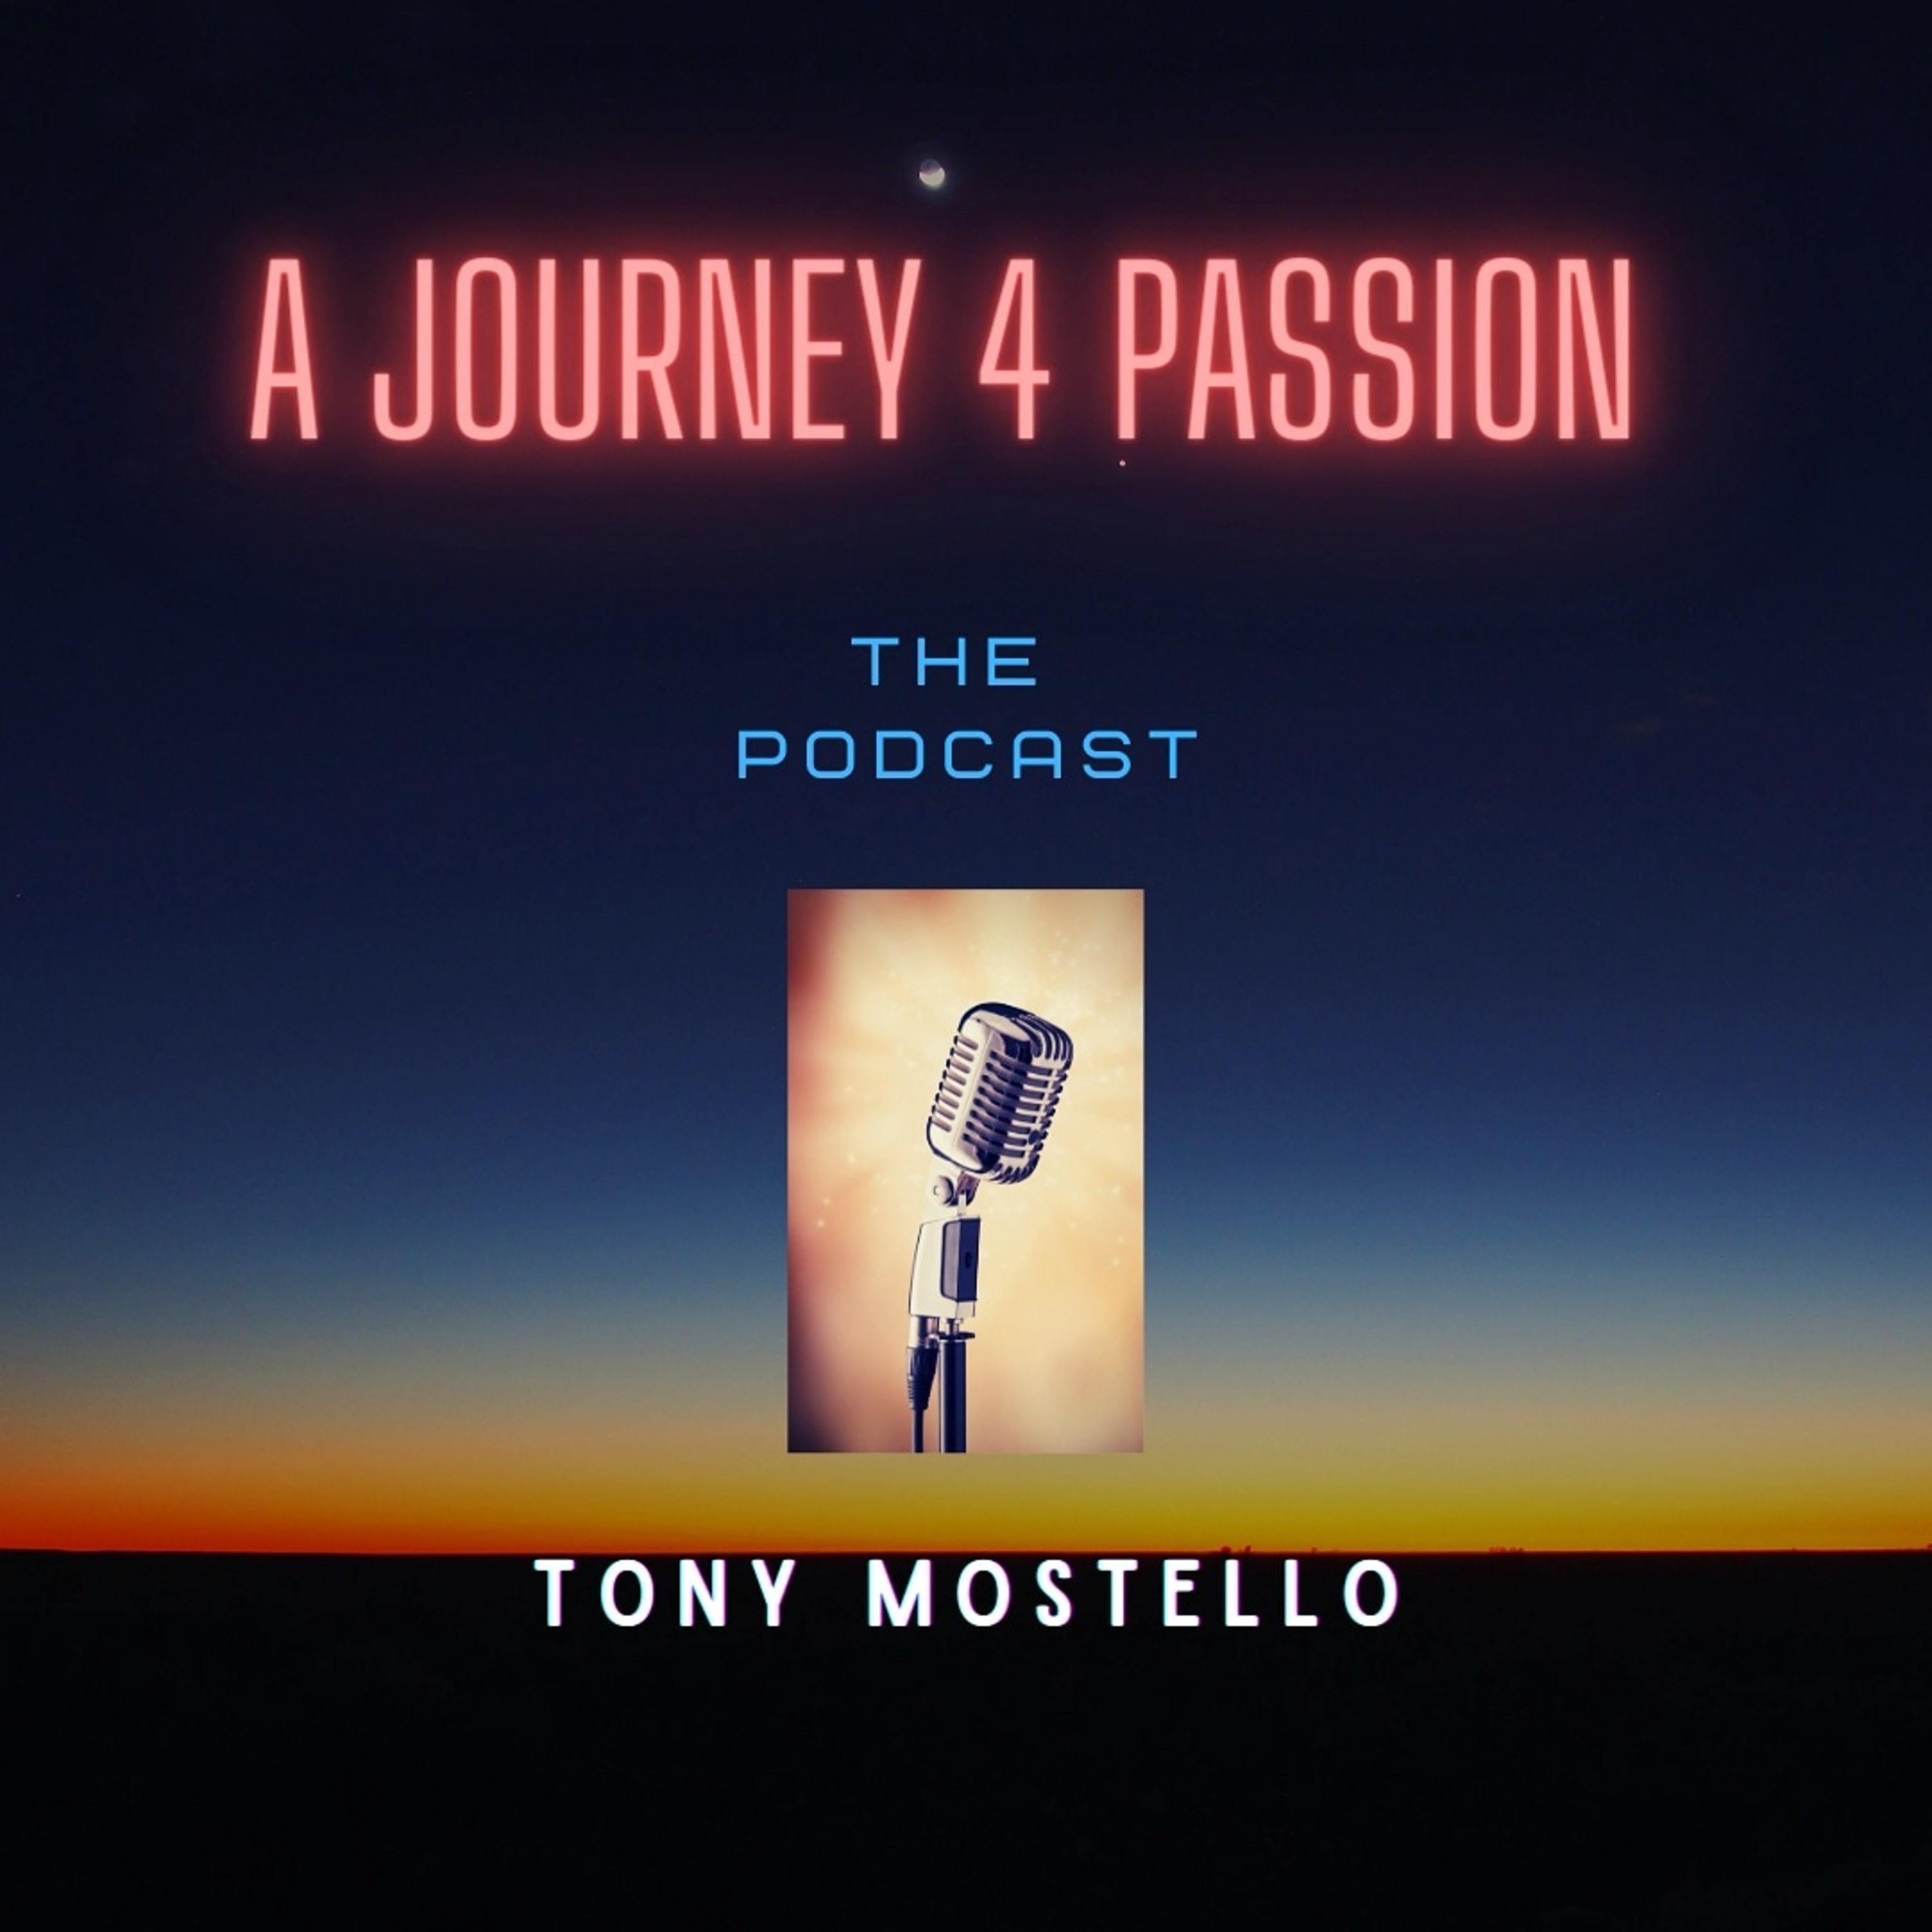 A Journey 4 Passion